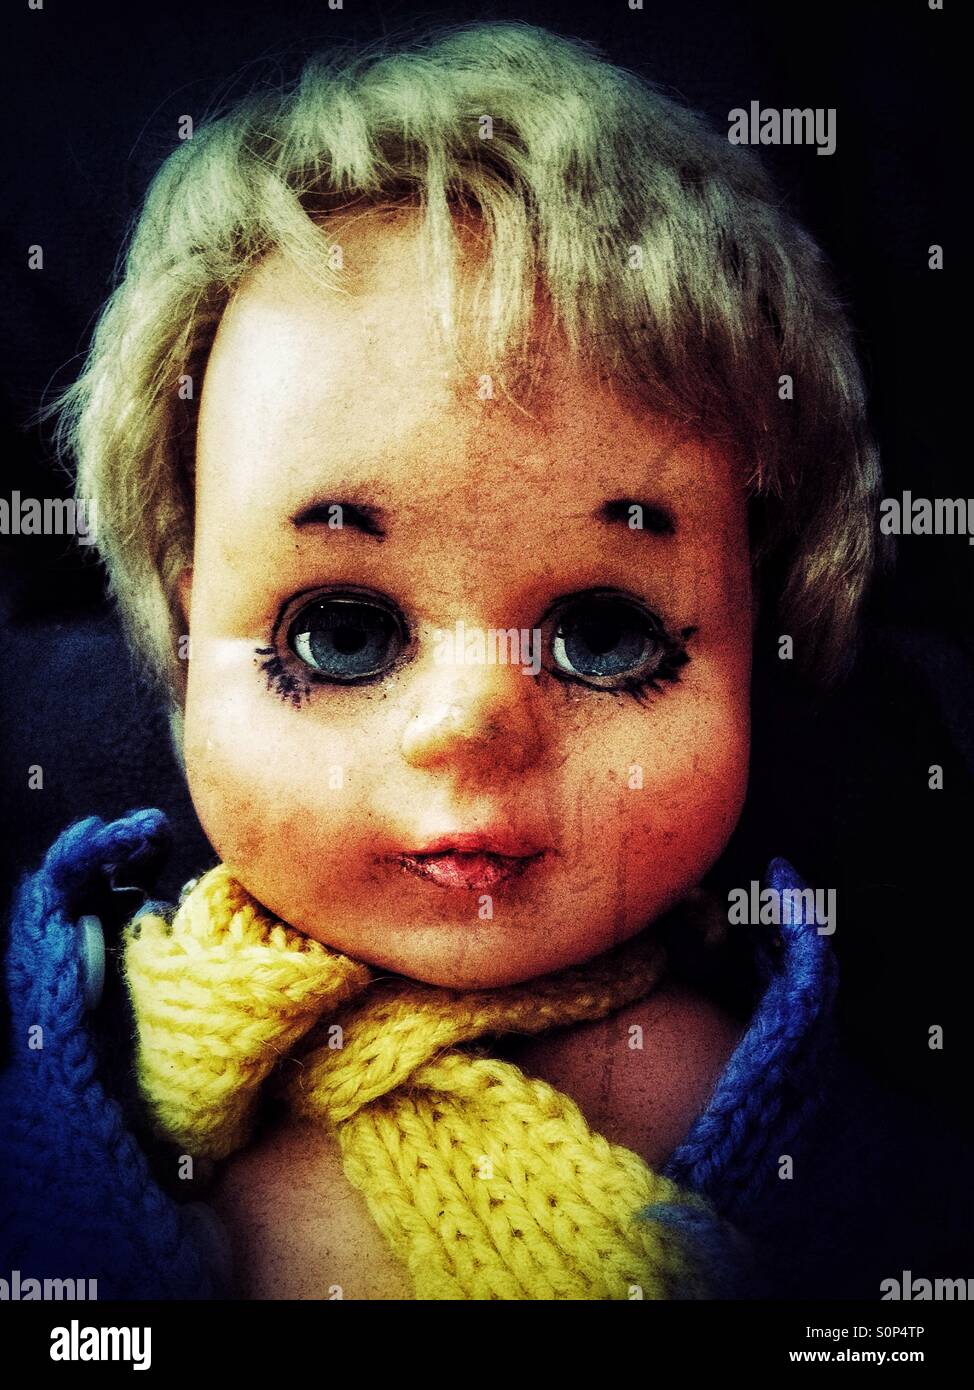 Sad looking baby doll Stock Photo